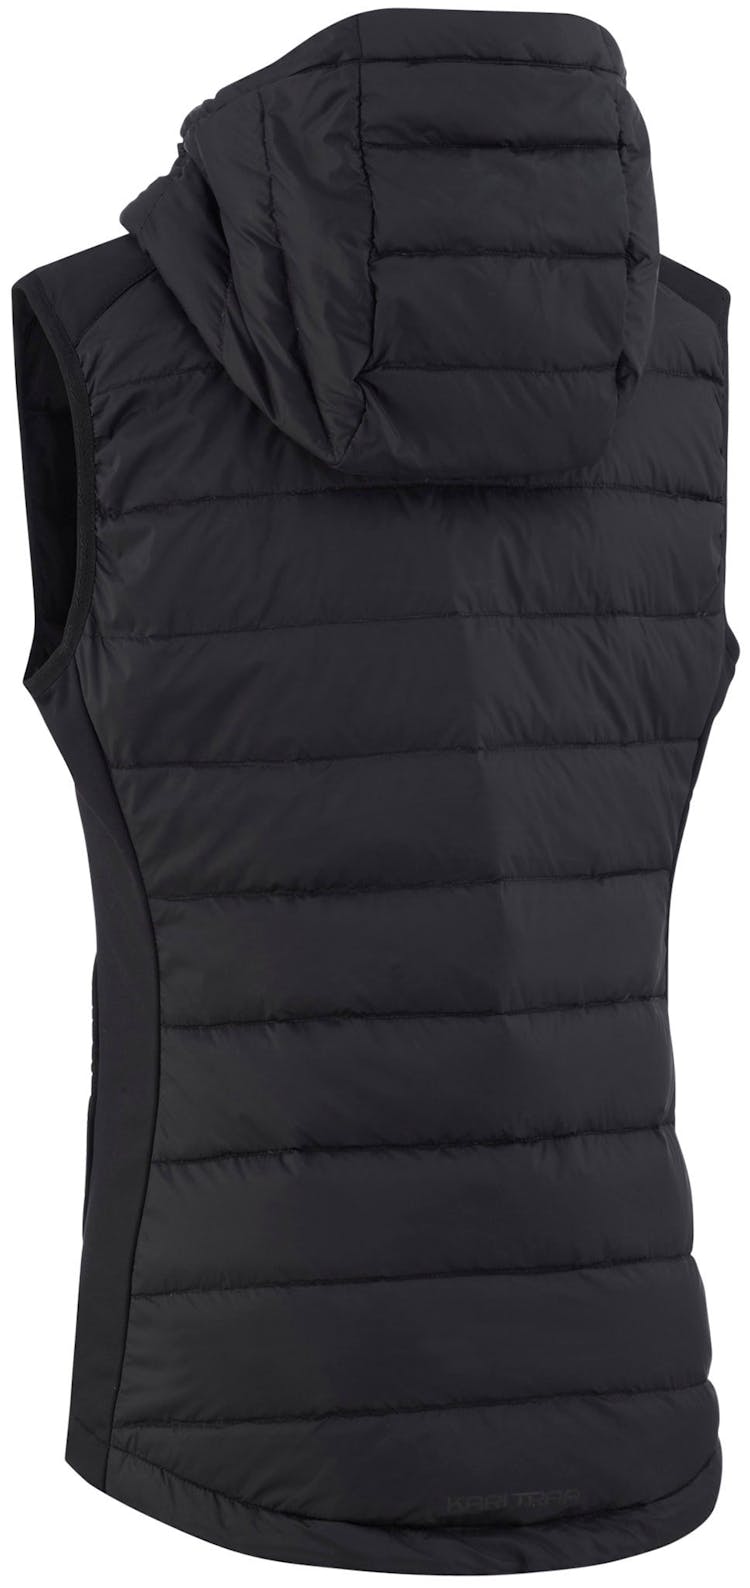 Product gallery image number 2 for product Eva Hybrid Vest Sleeveless - Women's